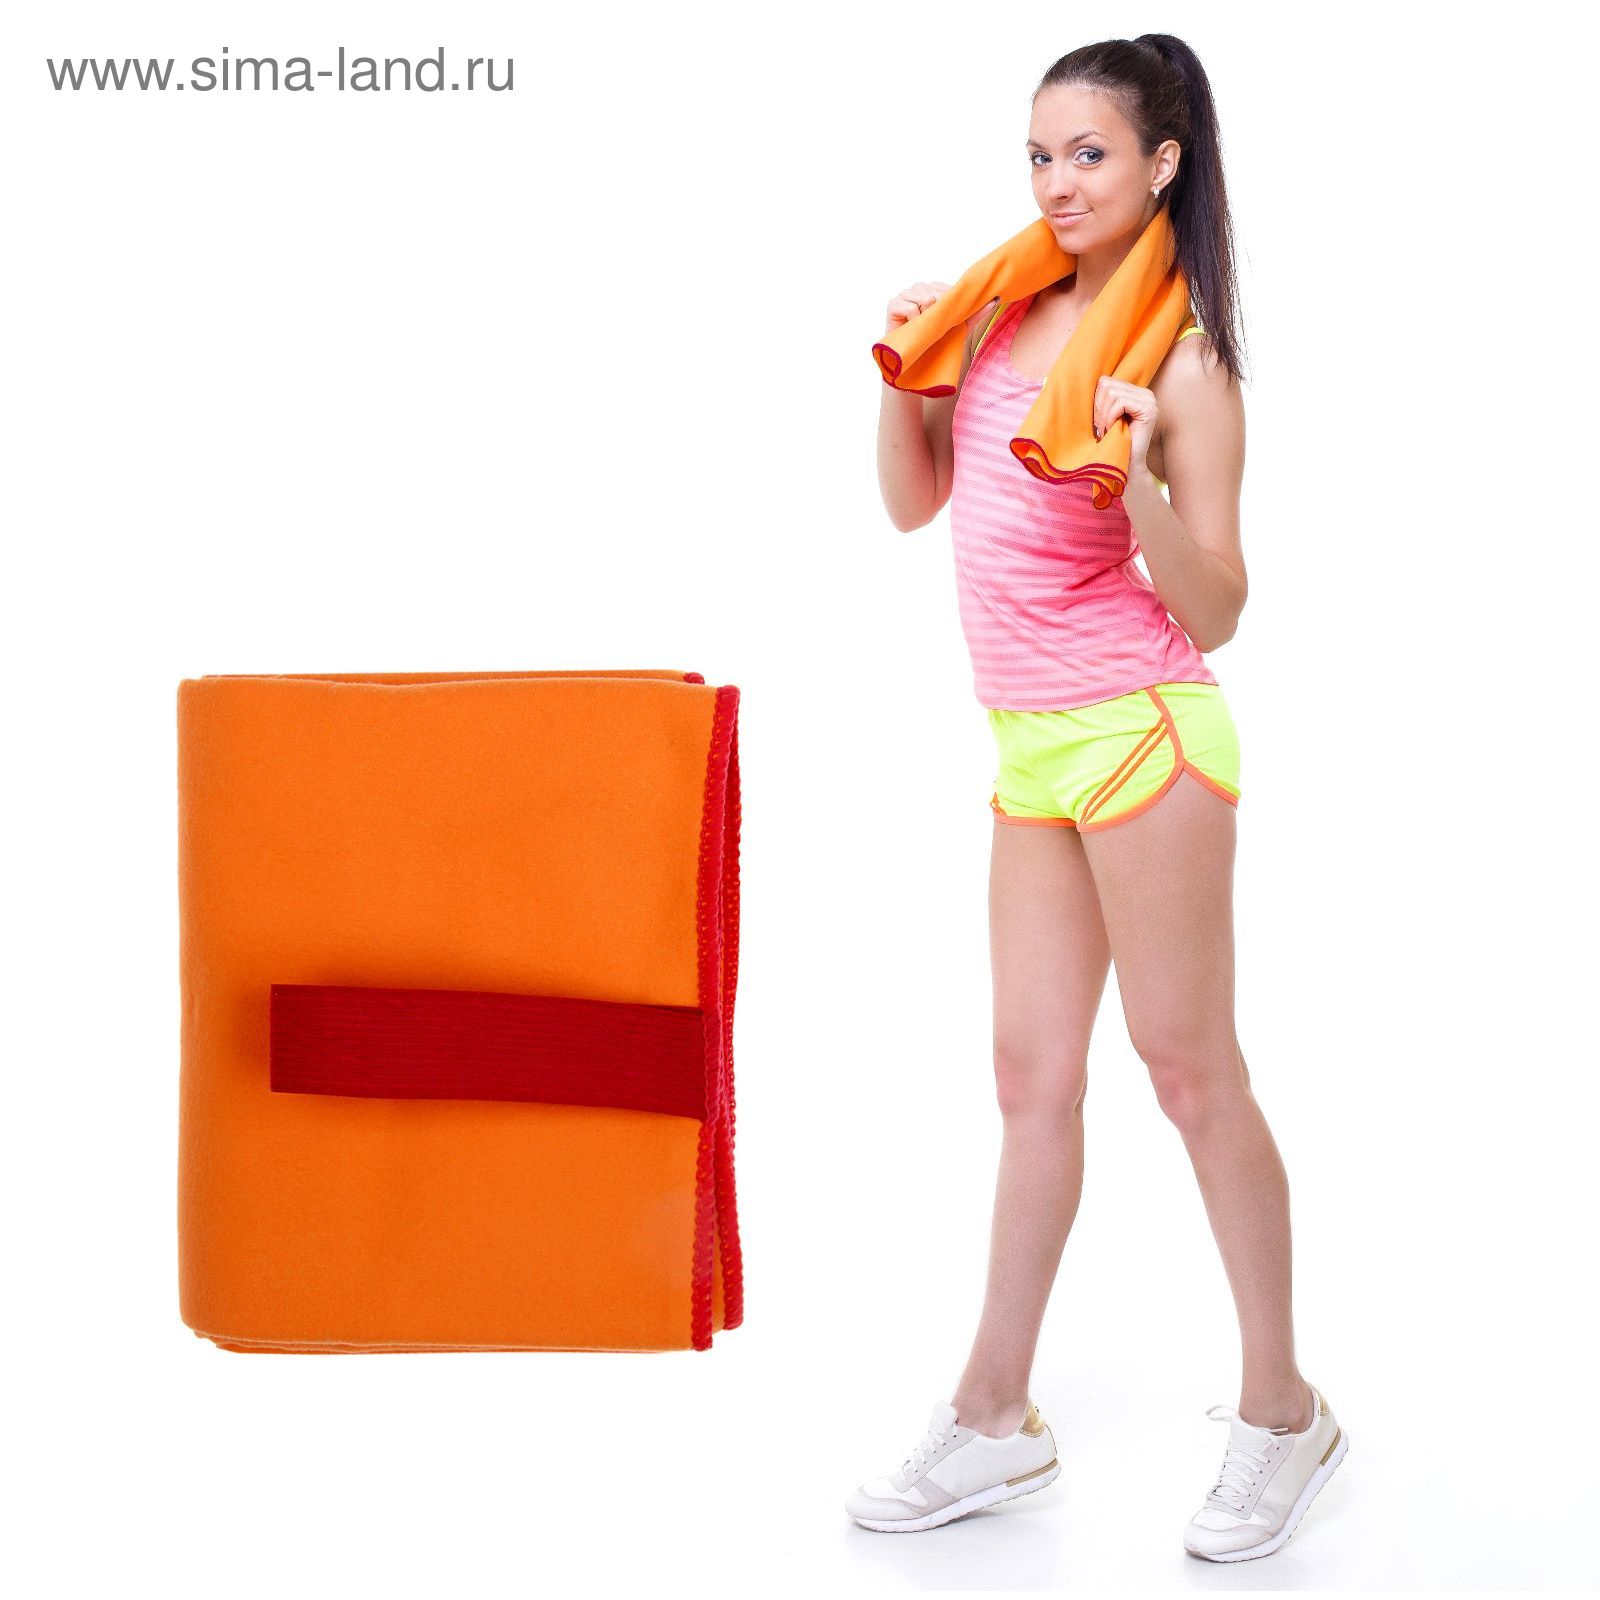 Спортивное полотенце ONLITOP, размер 40х55 см (вид 2), оранжевый, 200 г/м2